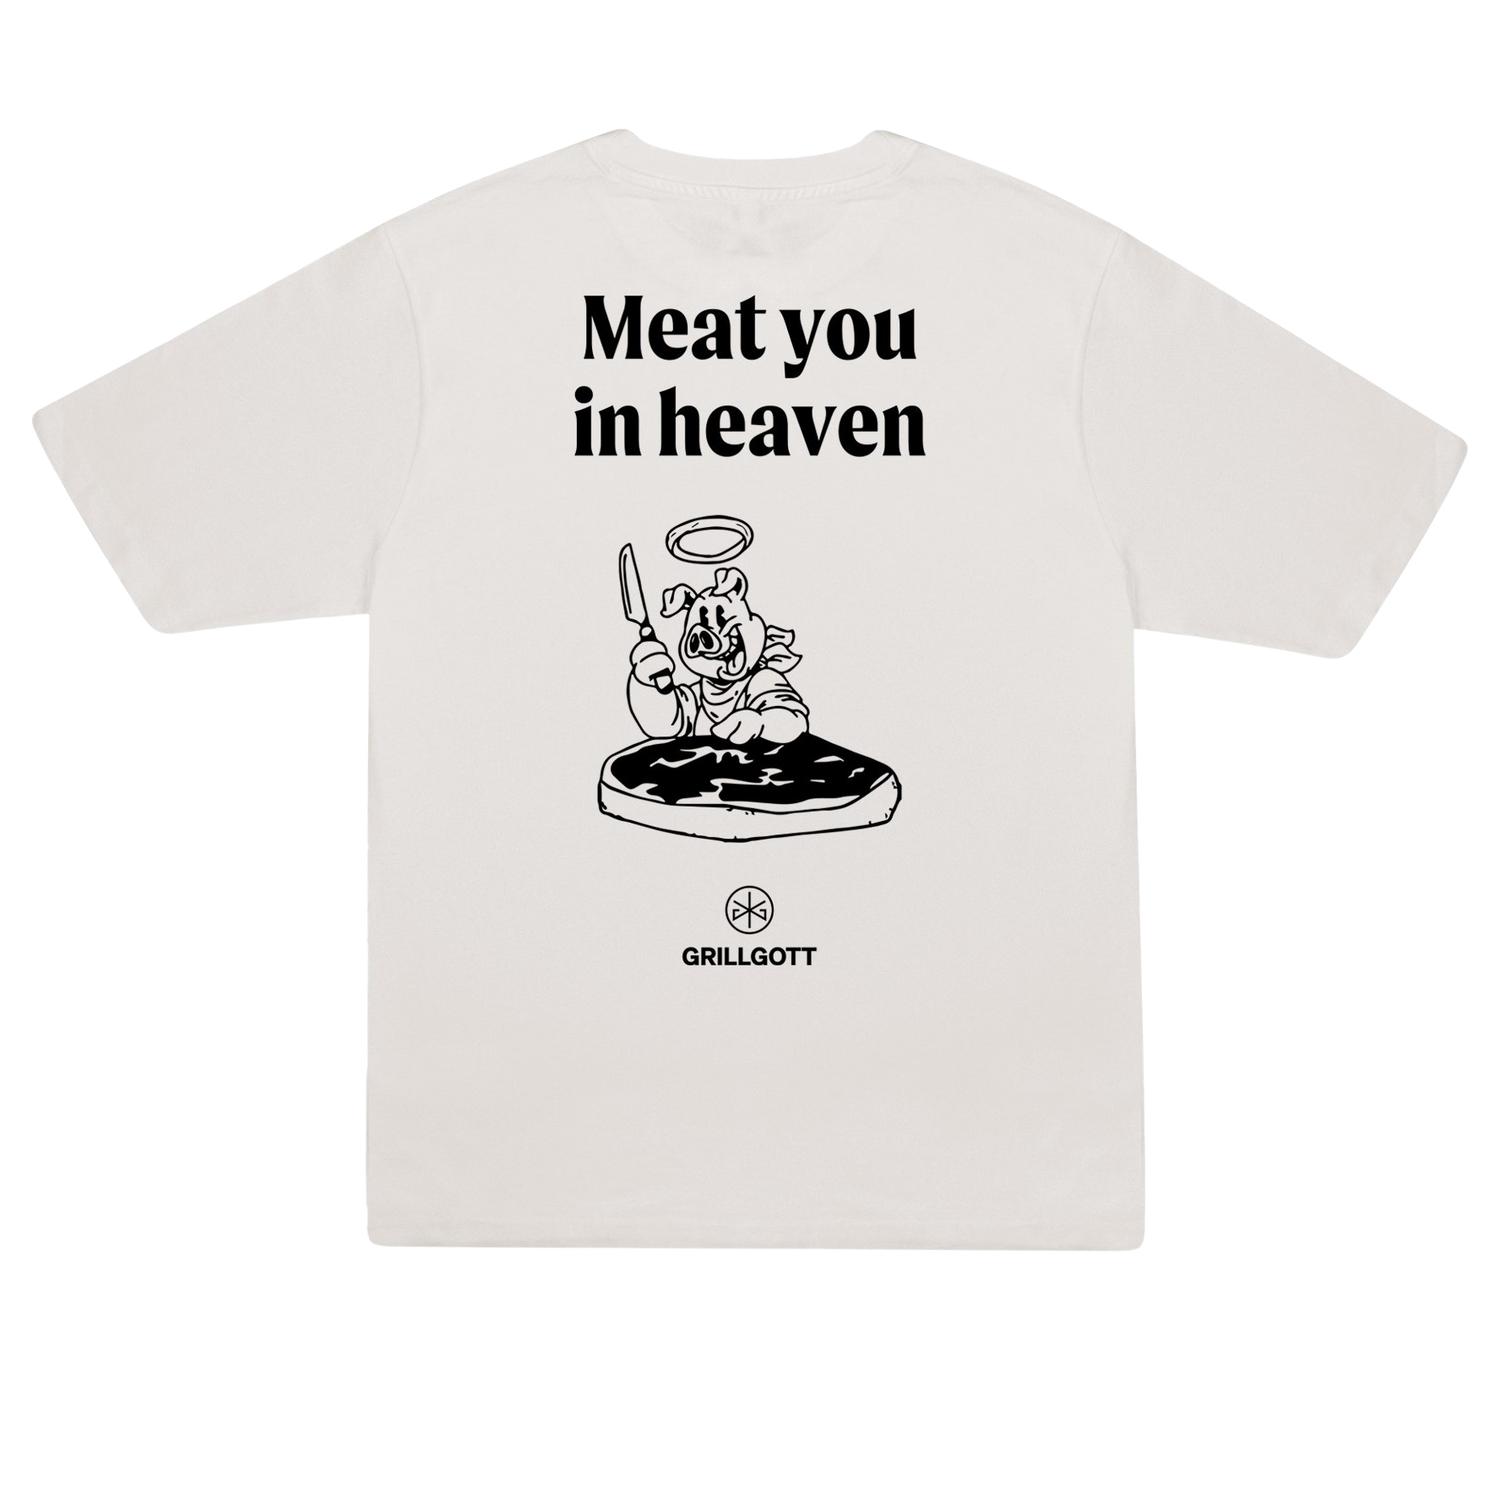 Grillgott T-Shirt XL "Meat you in heaven"